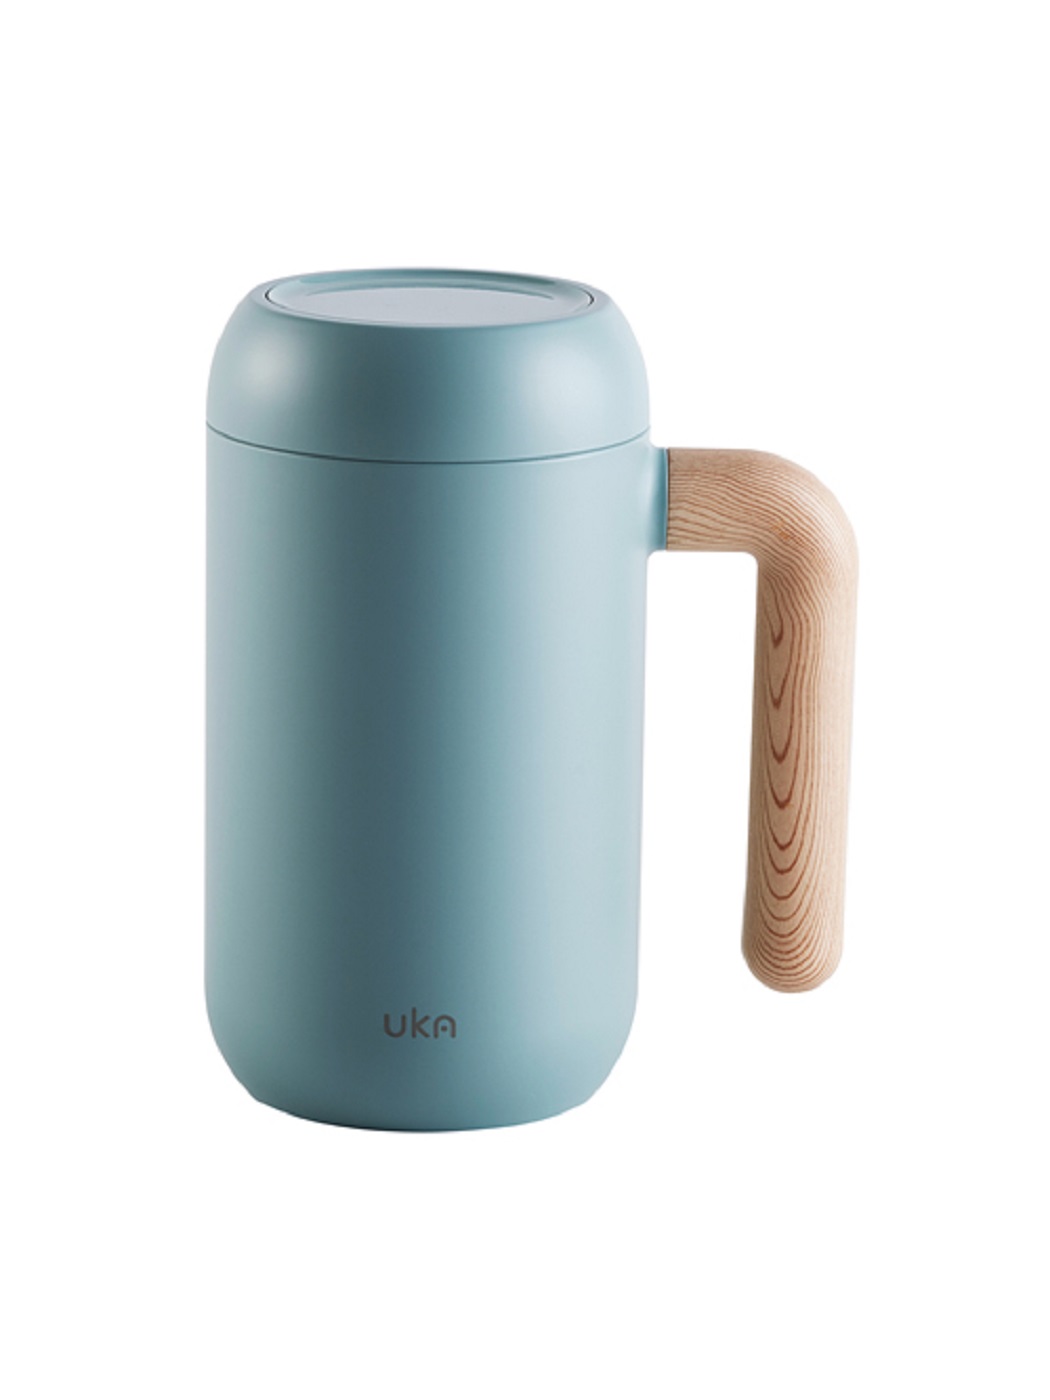 UKA|男|女|UKA Tea pro保温玻璃泡茶杯 420ml（含茶水分离套件）